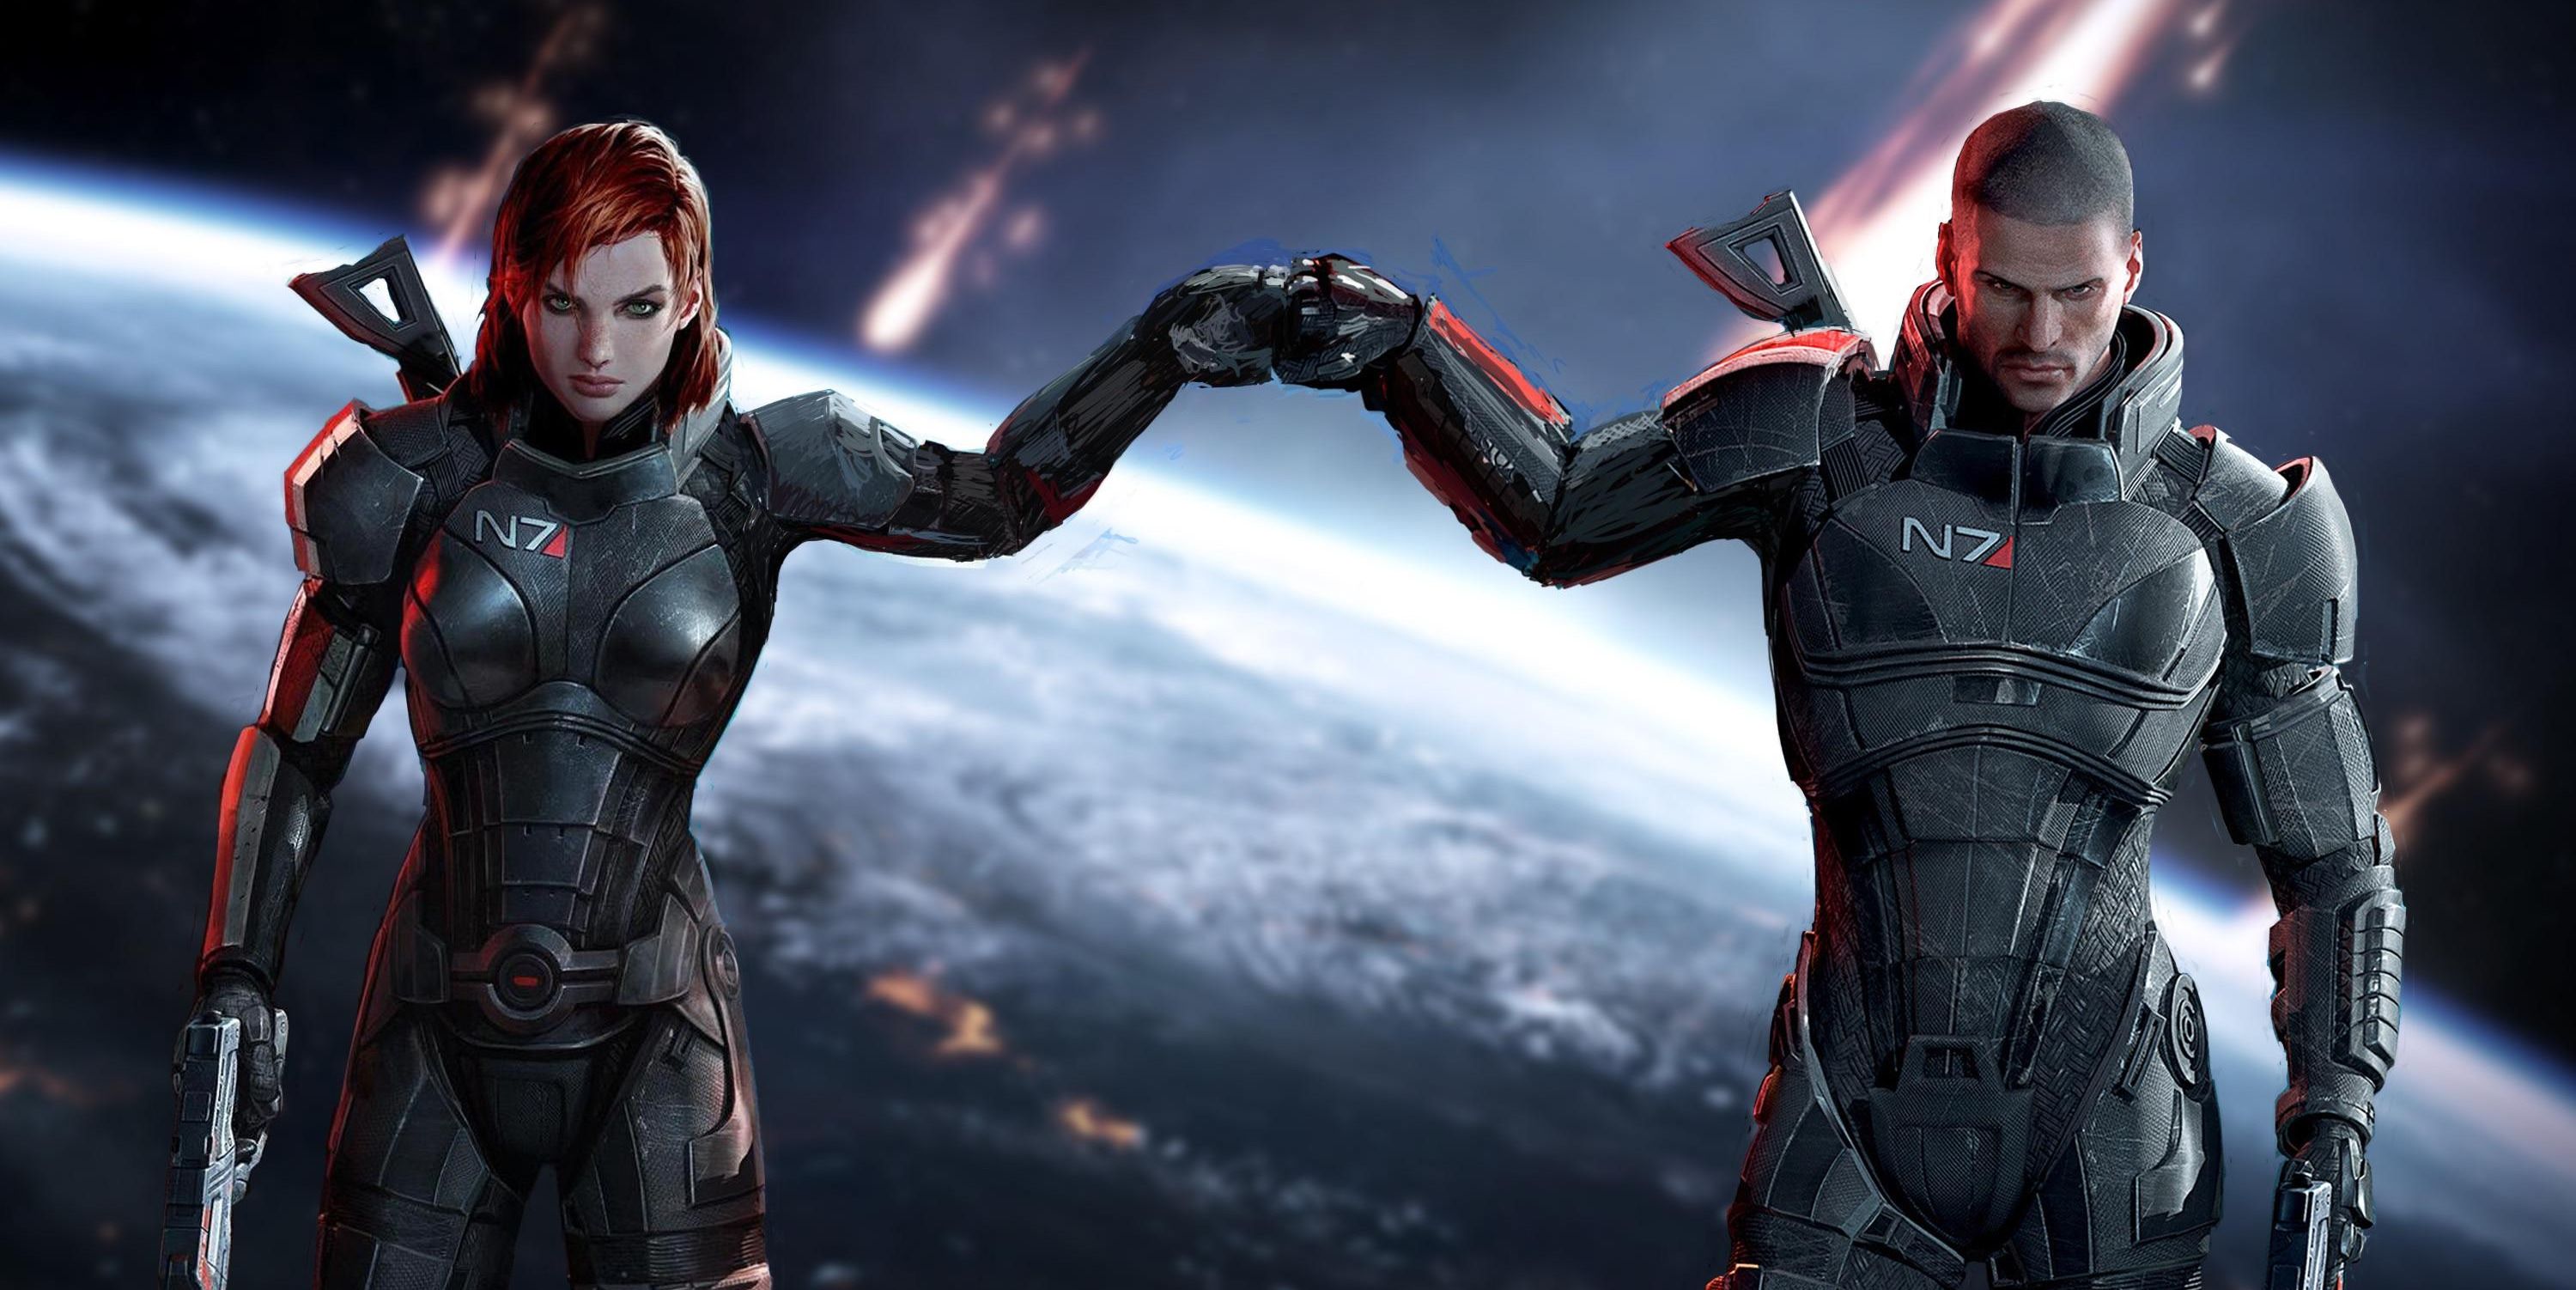 Commander Shepard Fist Bump